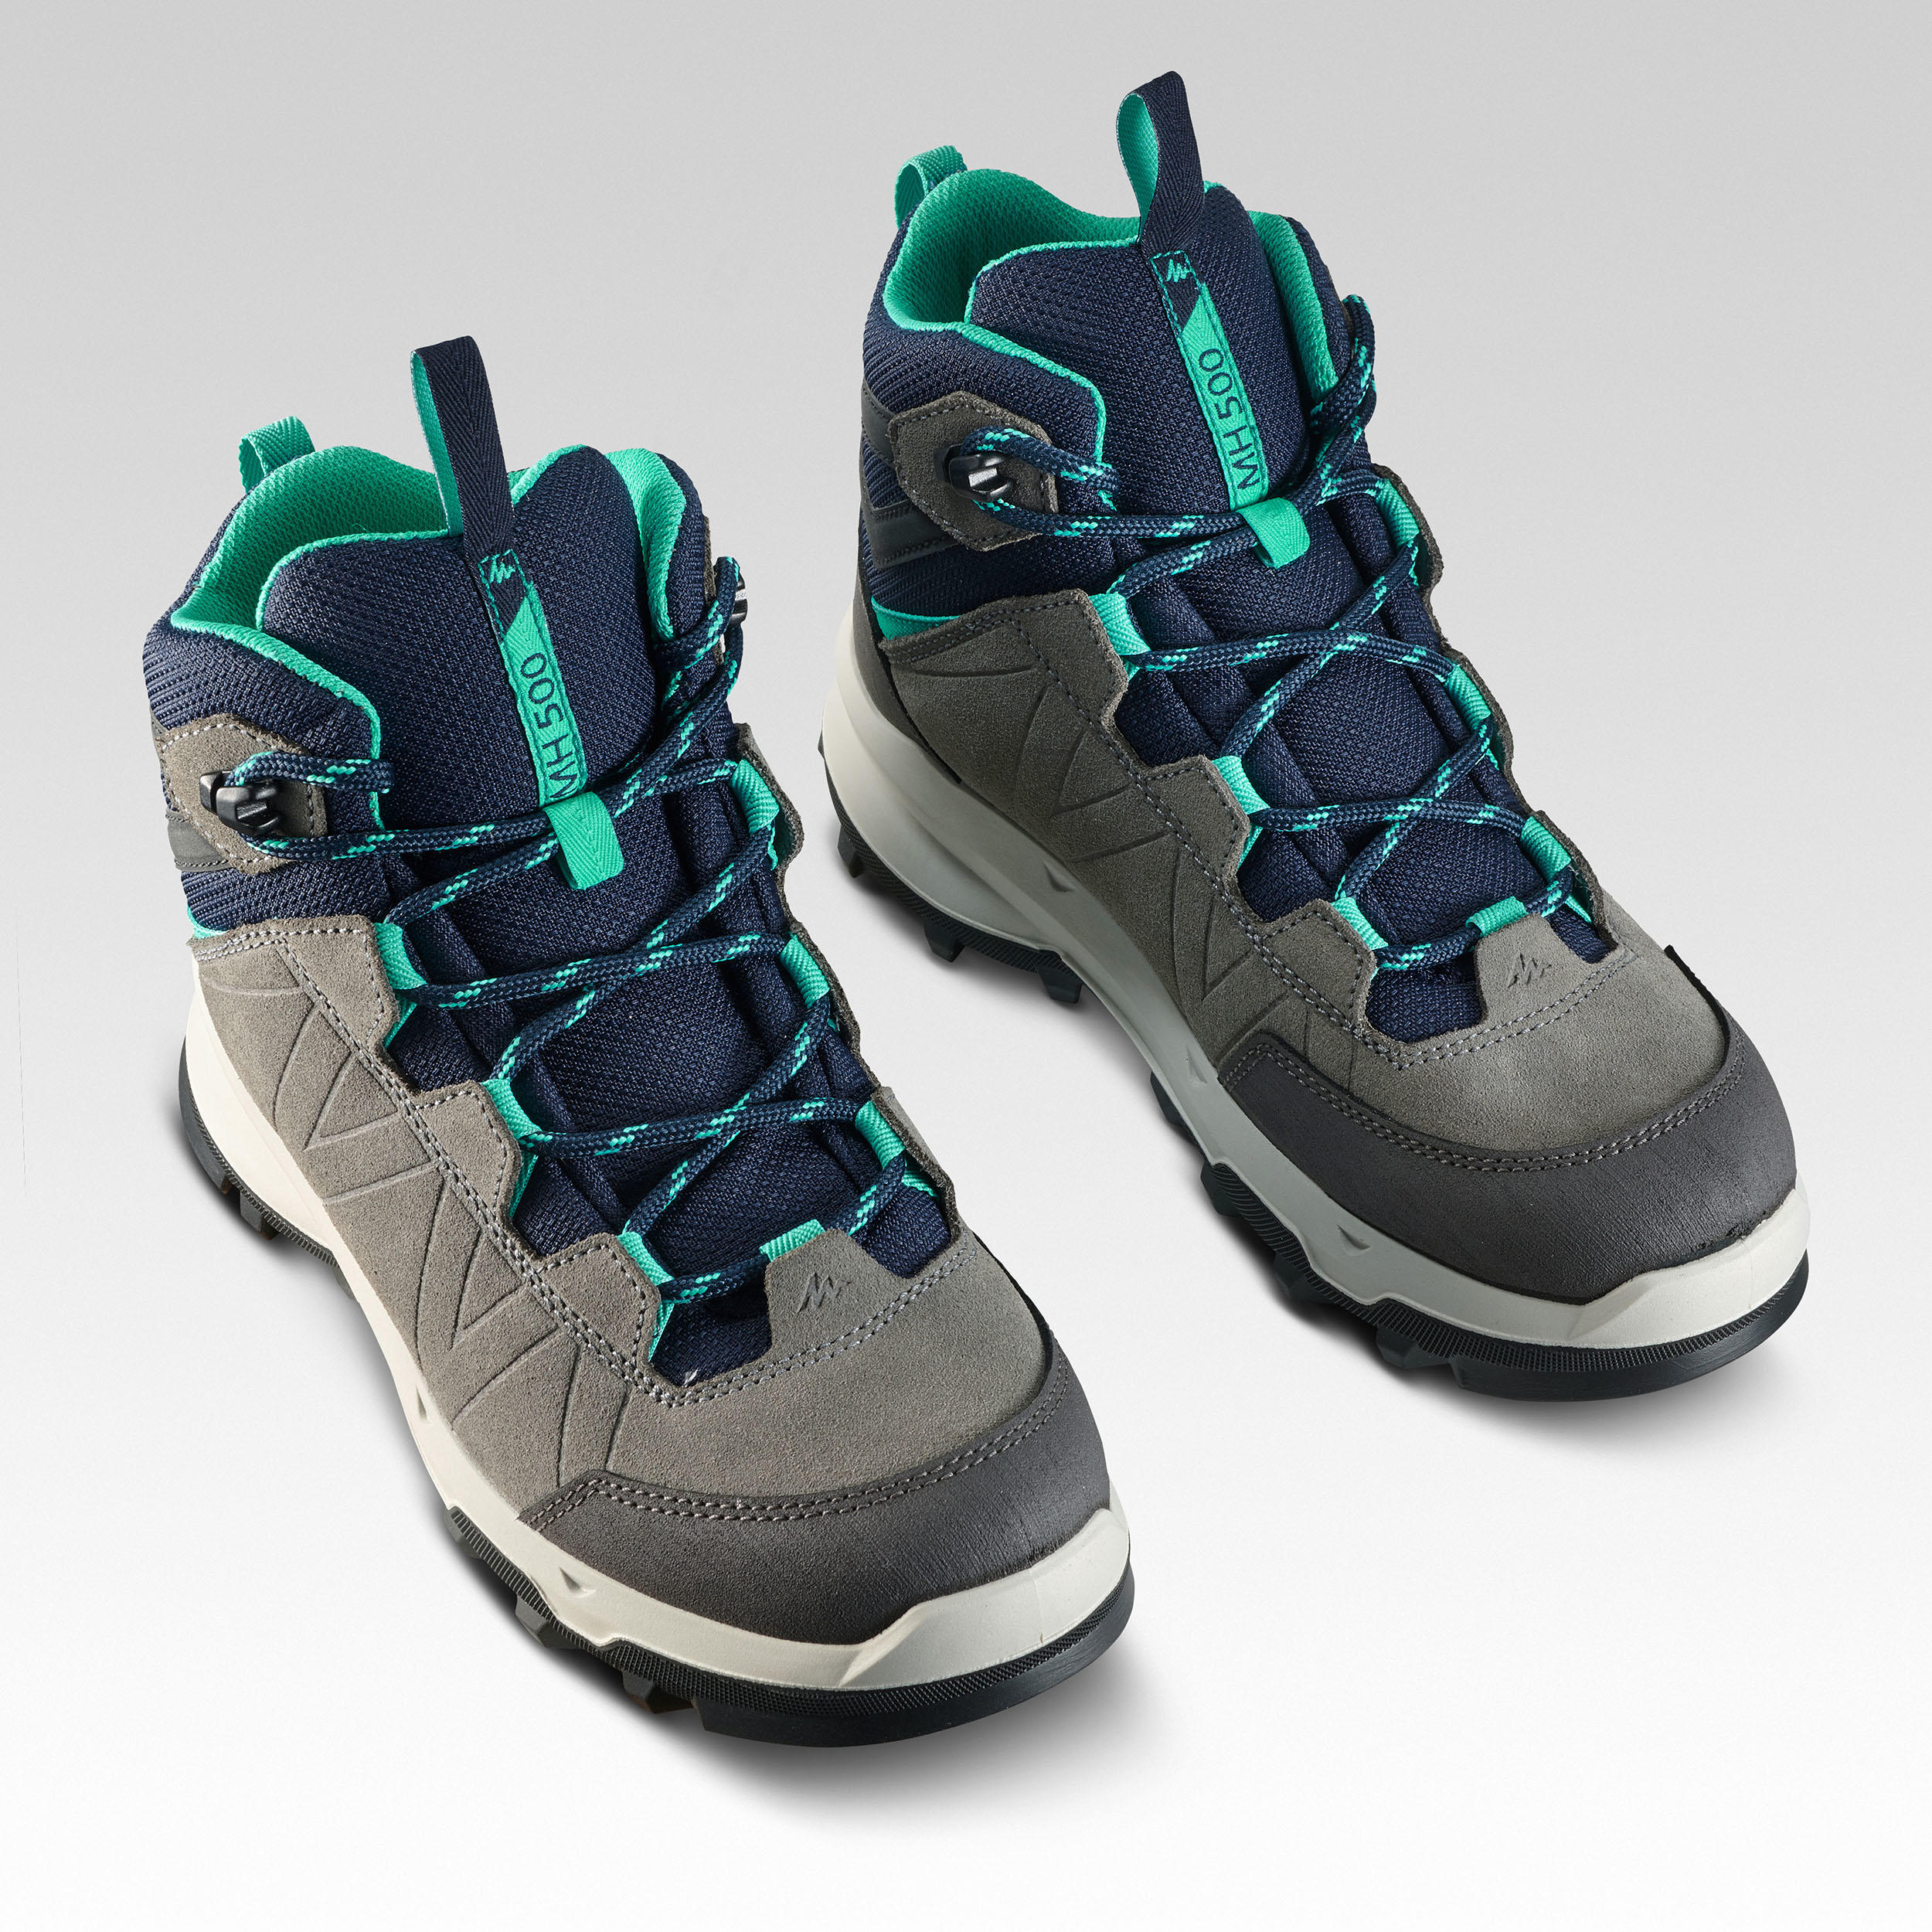 Kids’ Waterproof Mountain Walking Boots - MH500 Sizes 10-6 4/6